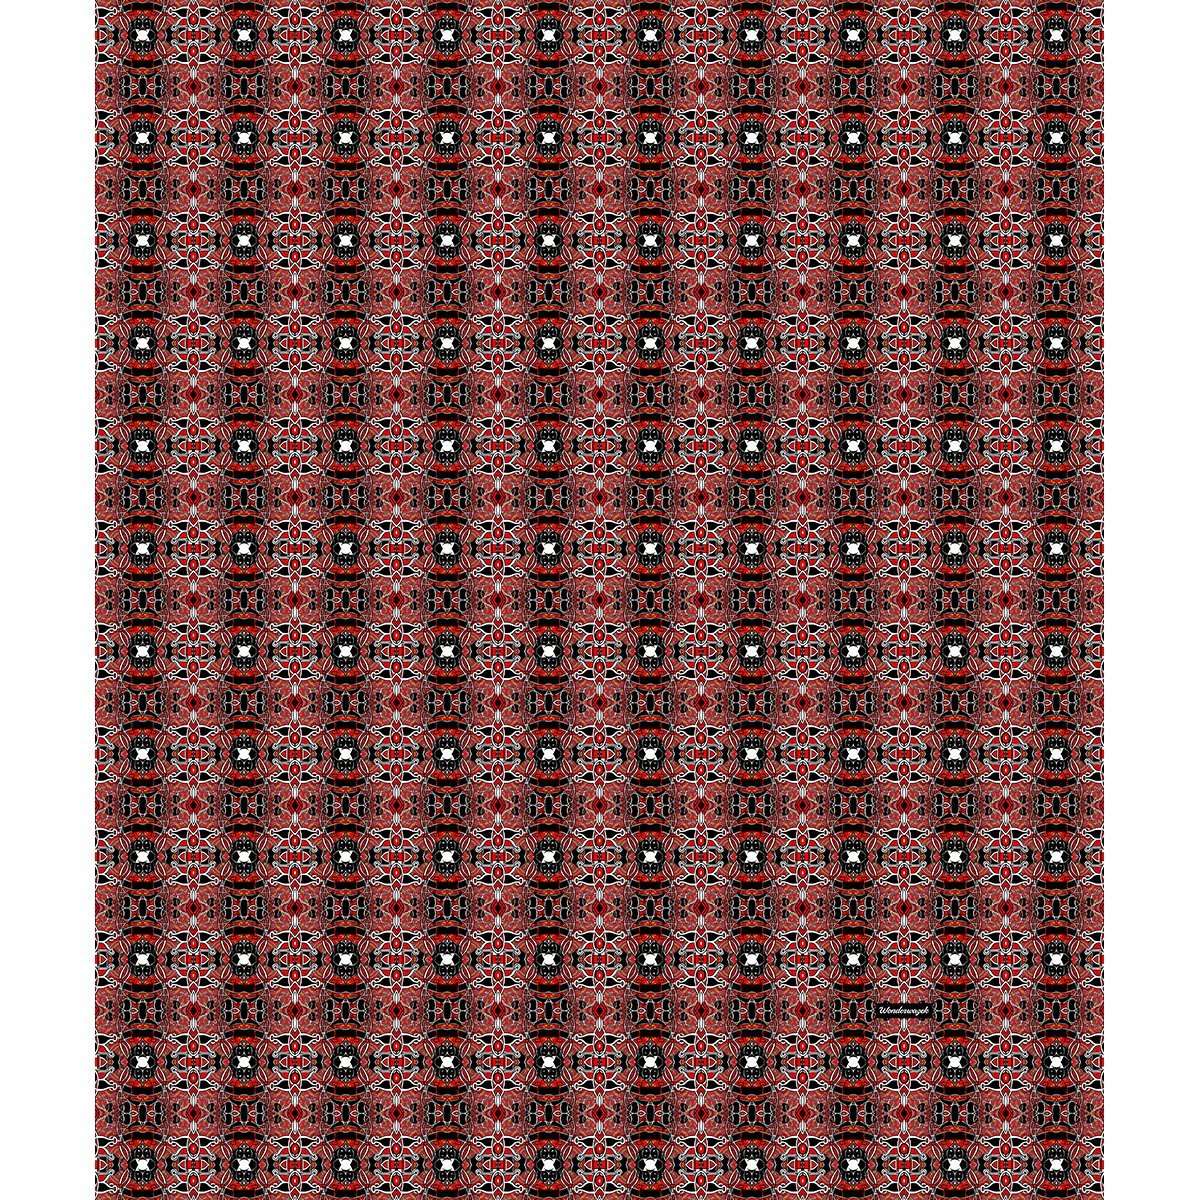 Decke • Zirkus – Variation 2, rot, schwarz, weiß - Wonderwazek